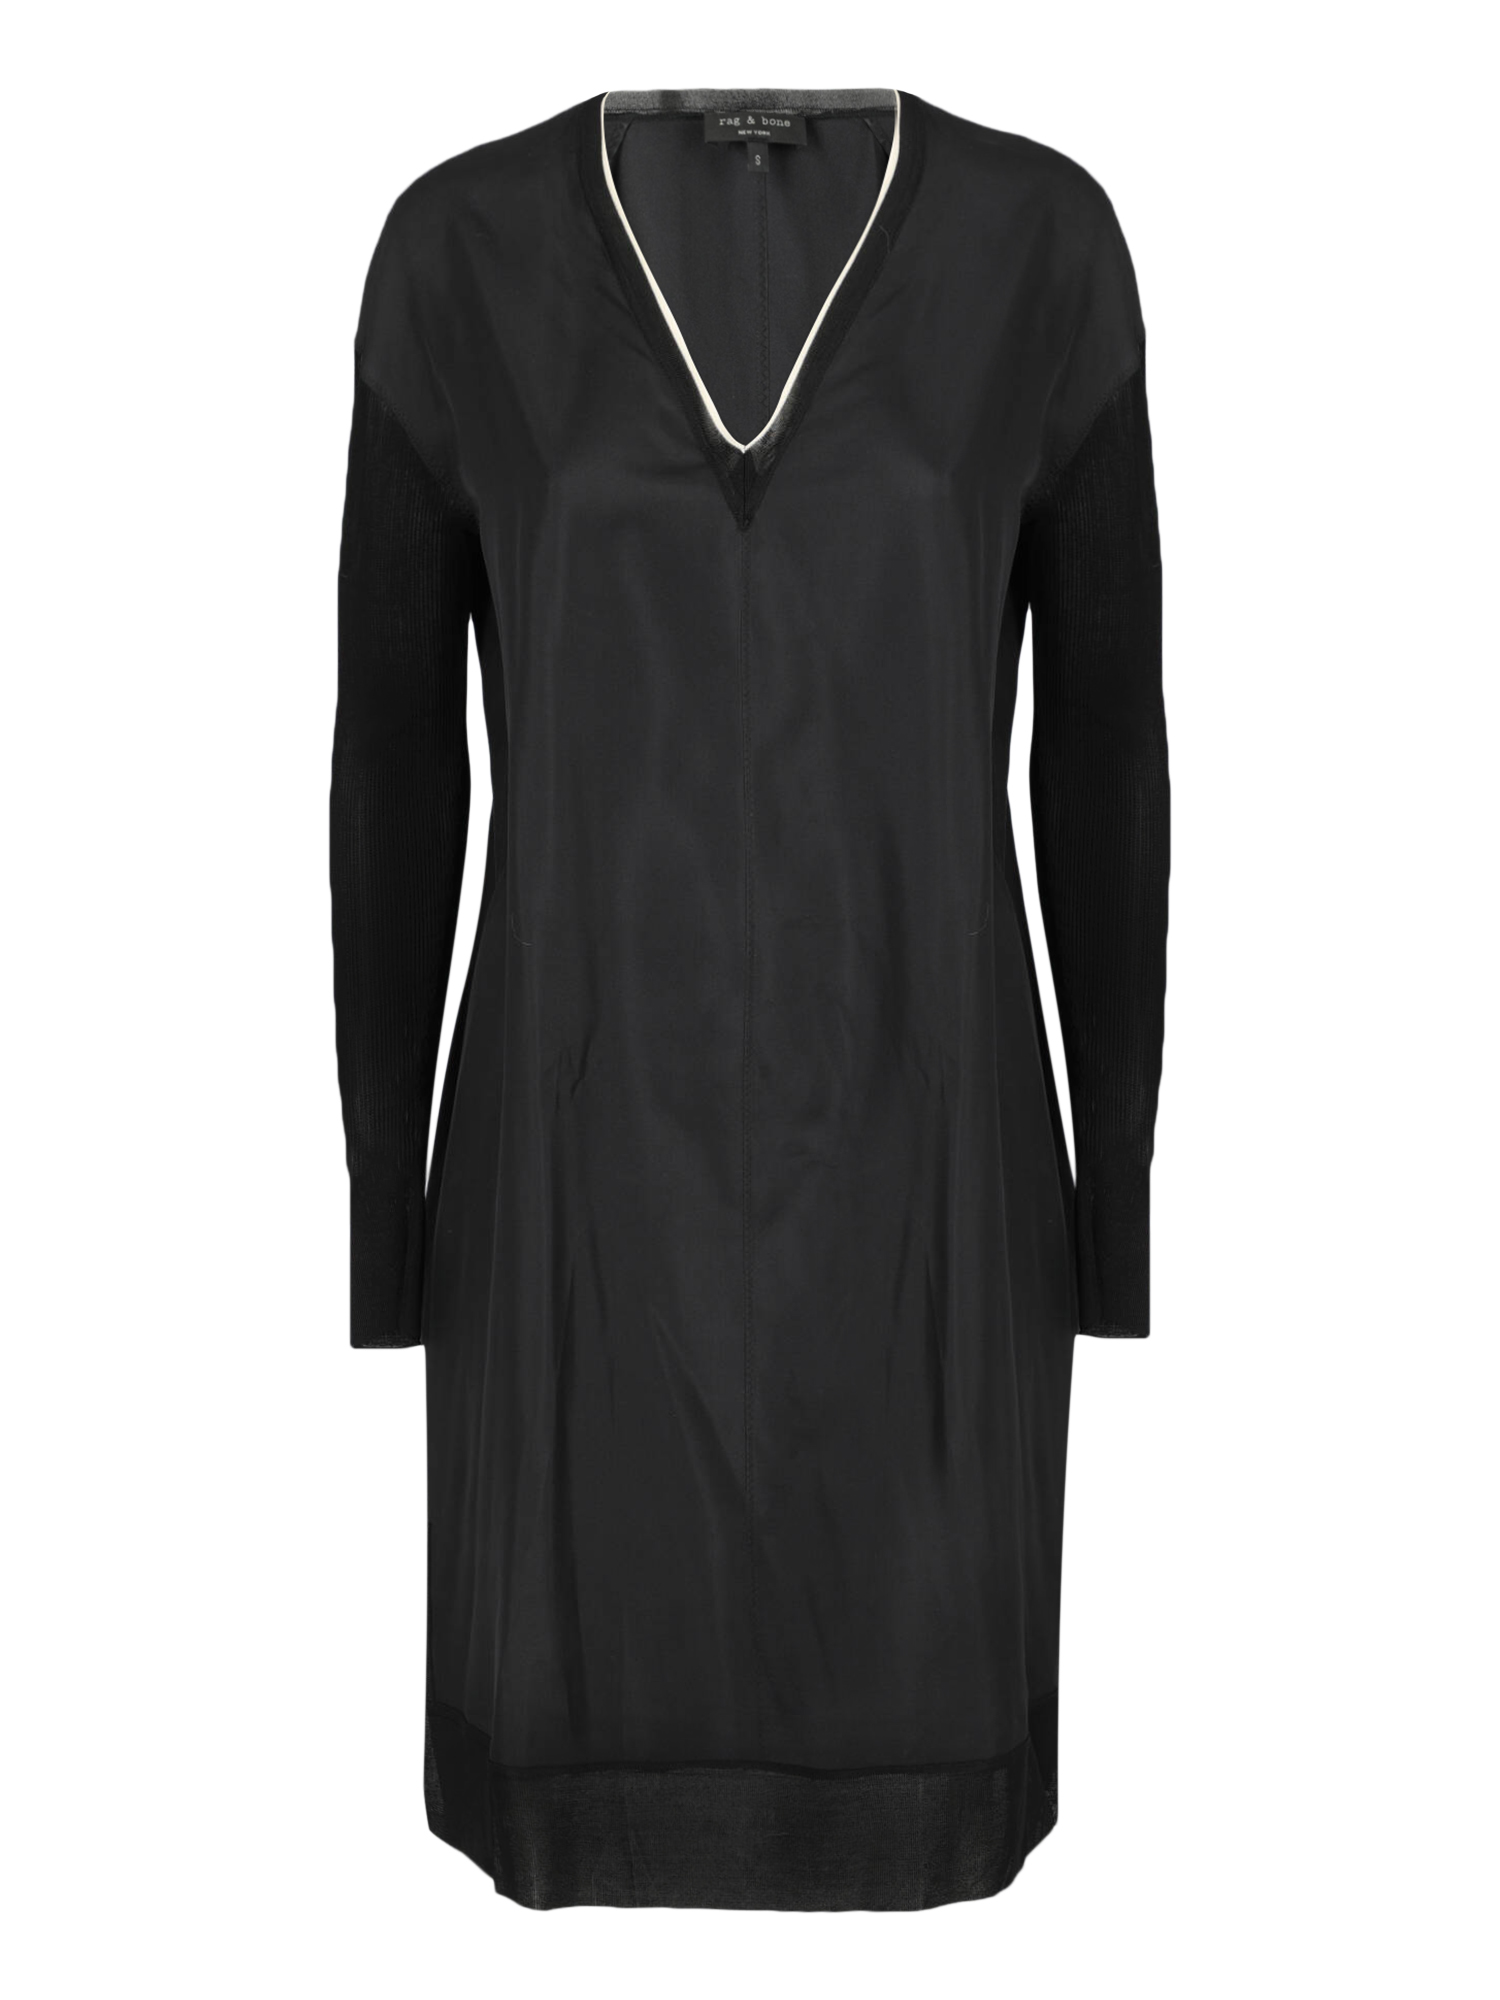 Robes Pour Femme - Rag & Bone - En Silk Black - Taille:  -